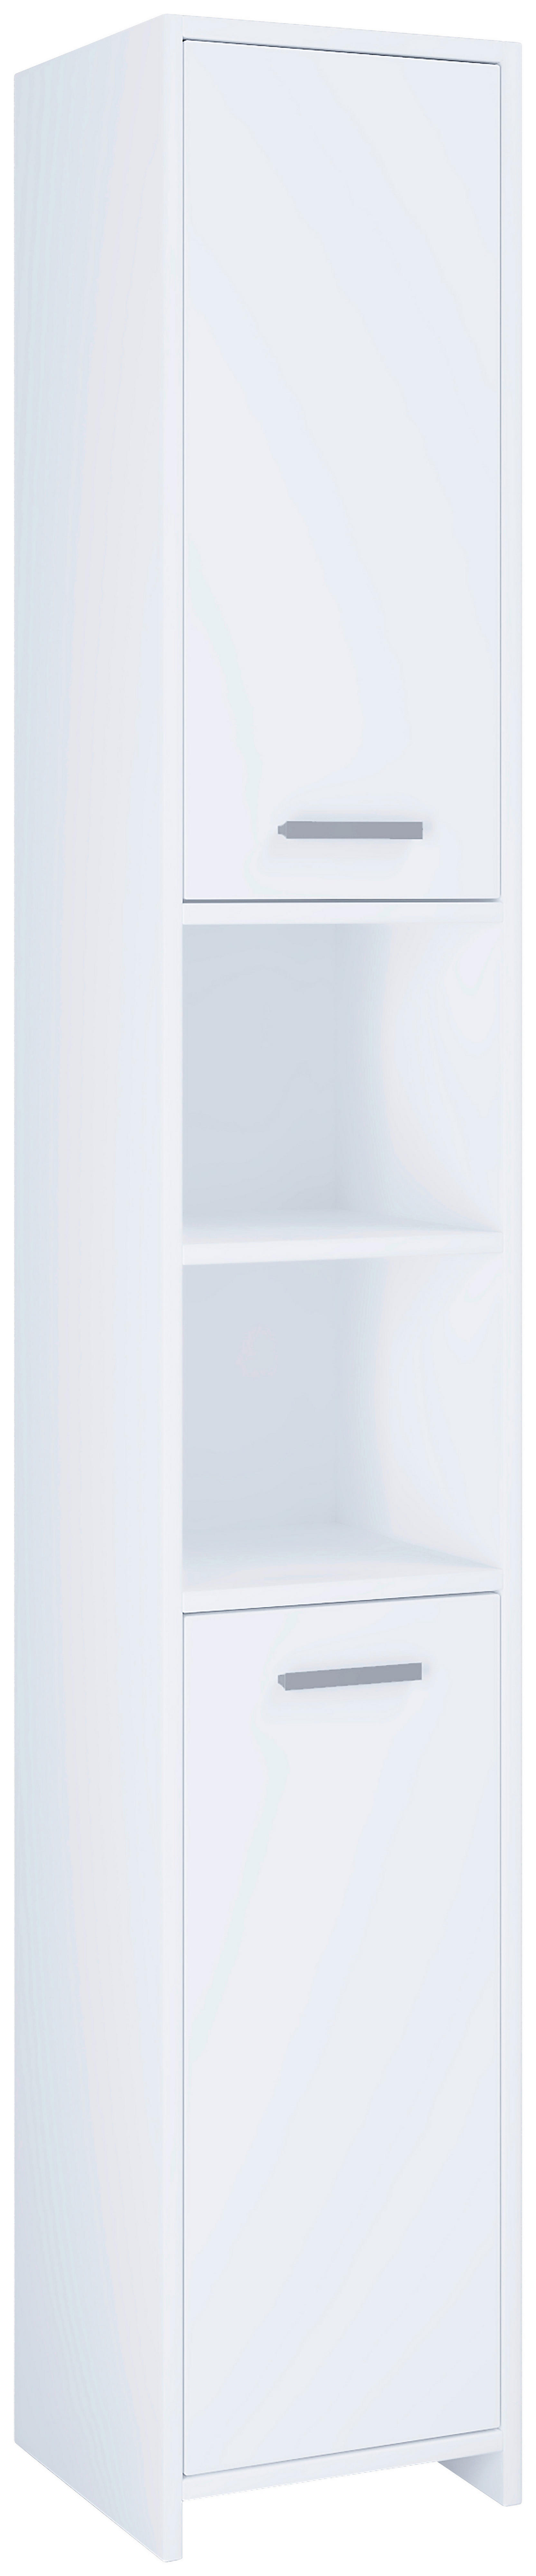 HOCHSCHRANK 30/190/30,4 cm  - Weiß/Grau, MODERN, Holzwerkstoff/Kunststoff (30/190/30,4cm) - MID.YOU